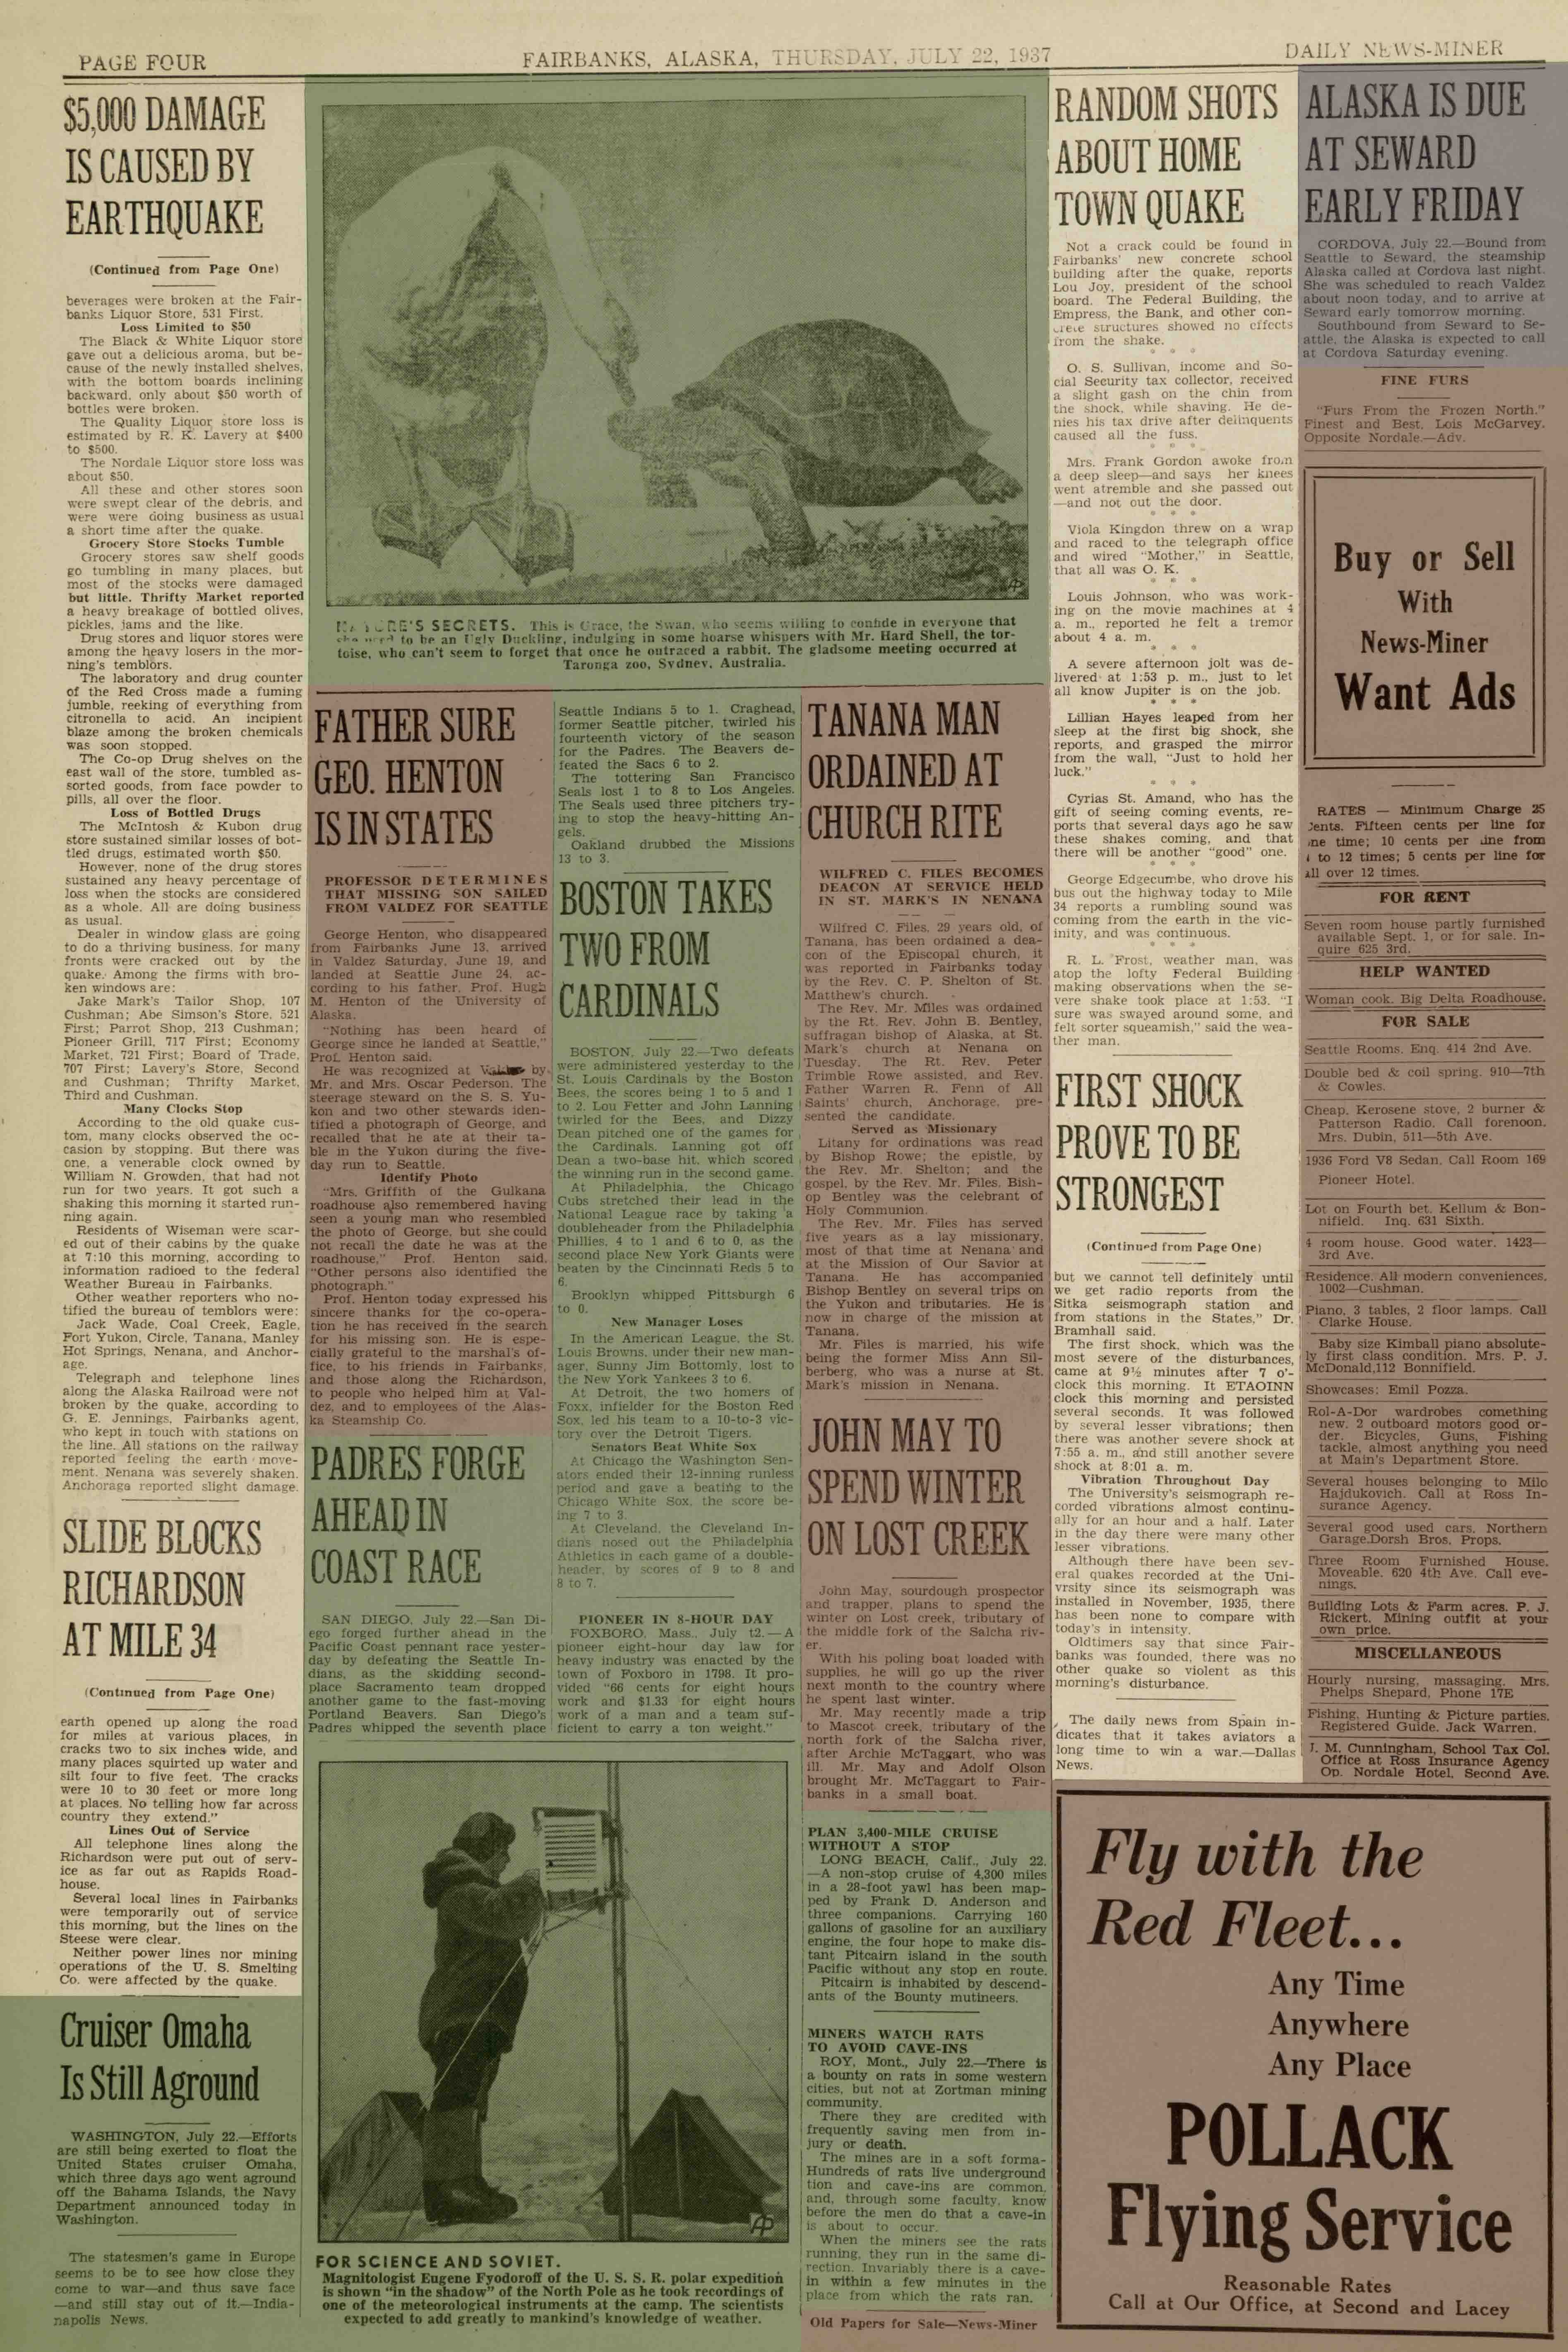 1937 July 22, Fairbanks Daily News-Miner (pg 4)